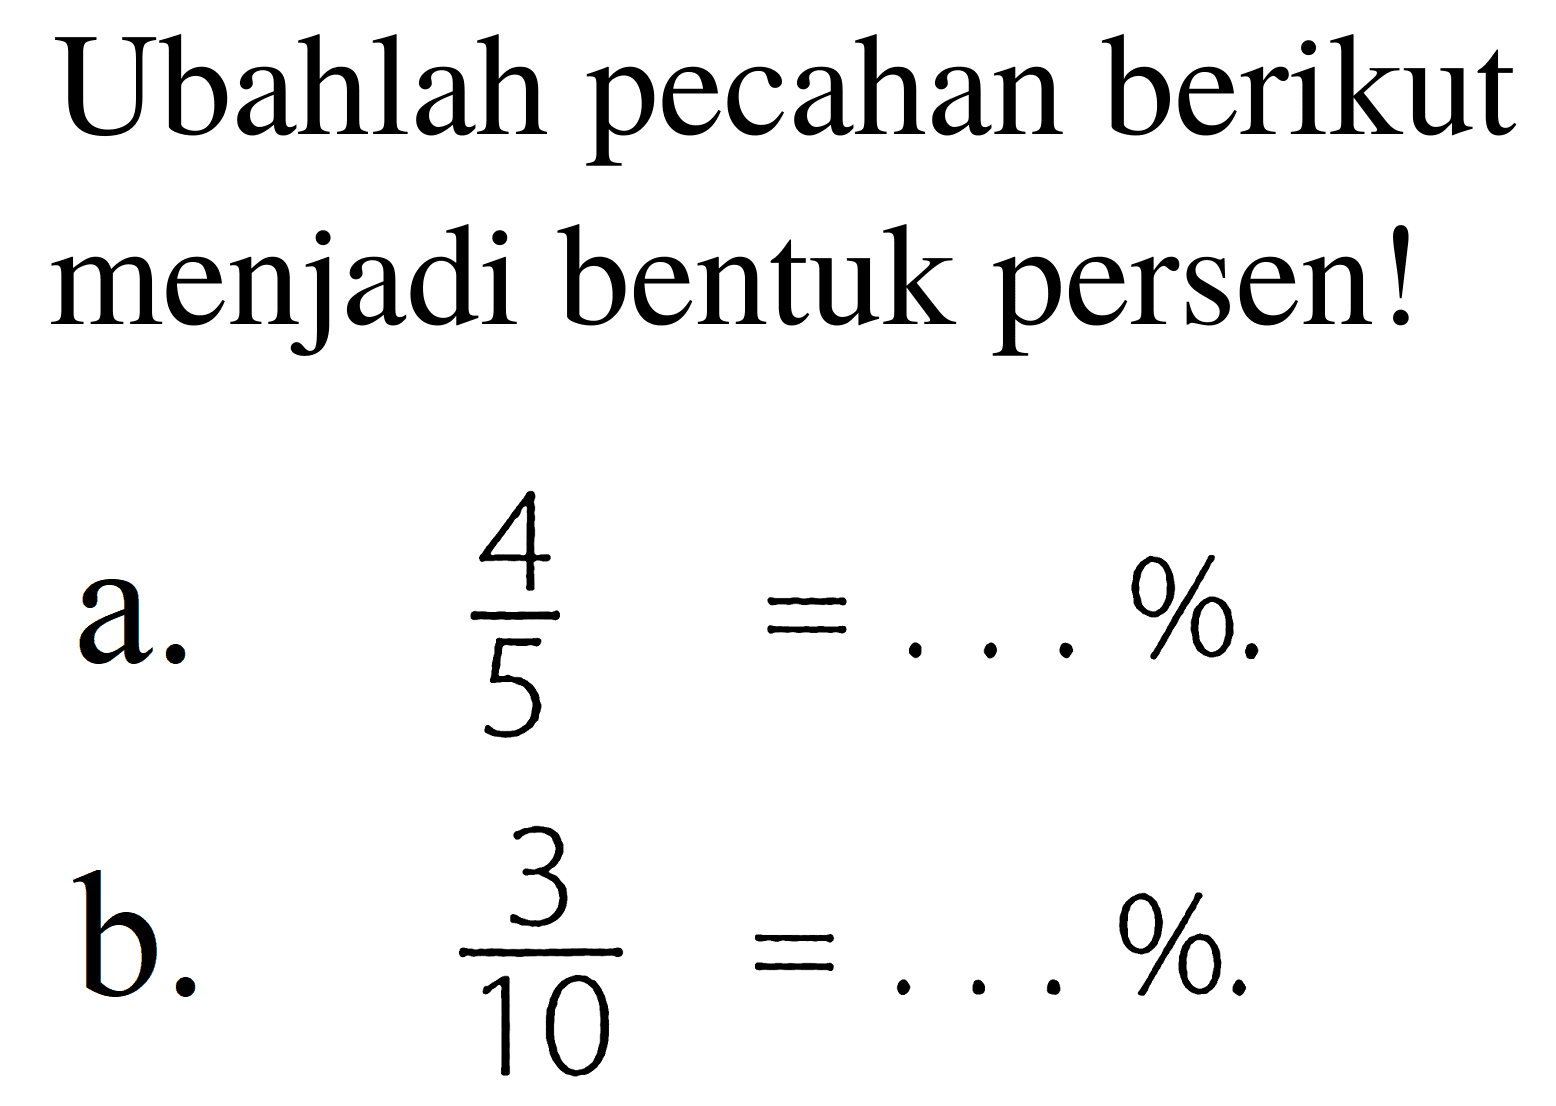 Ubahlah pecahan berikut menjadi bentuk persen!
a.  (4)/(5)=... % .
b.   (3)/(10)=... % .